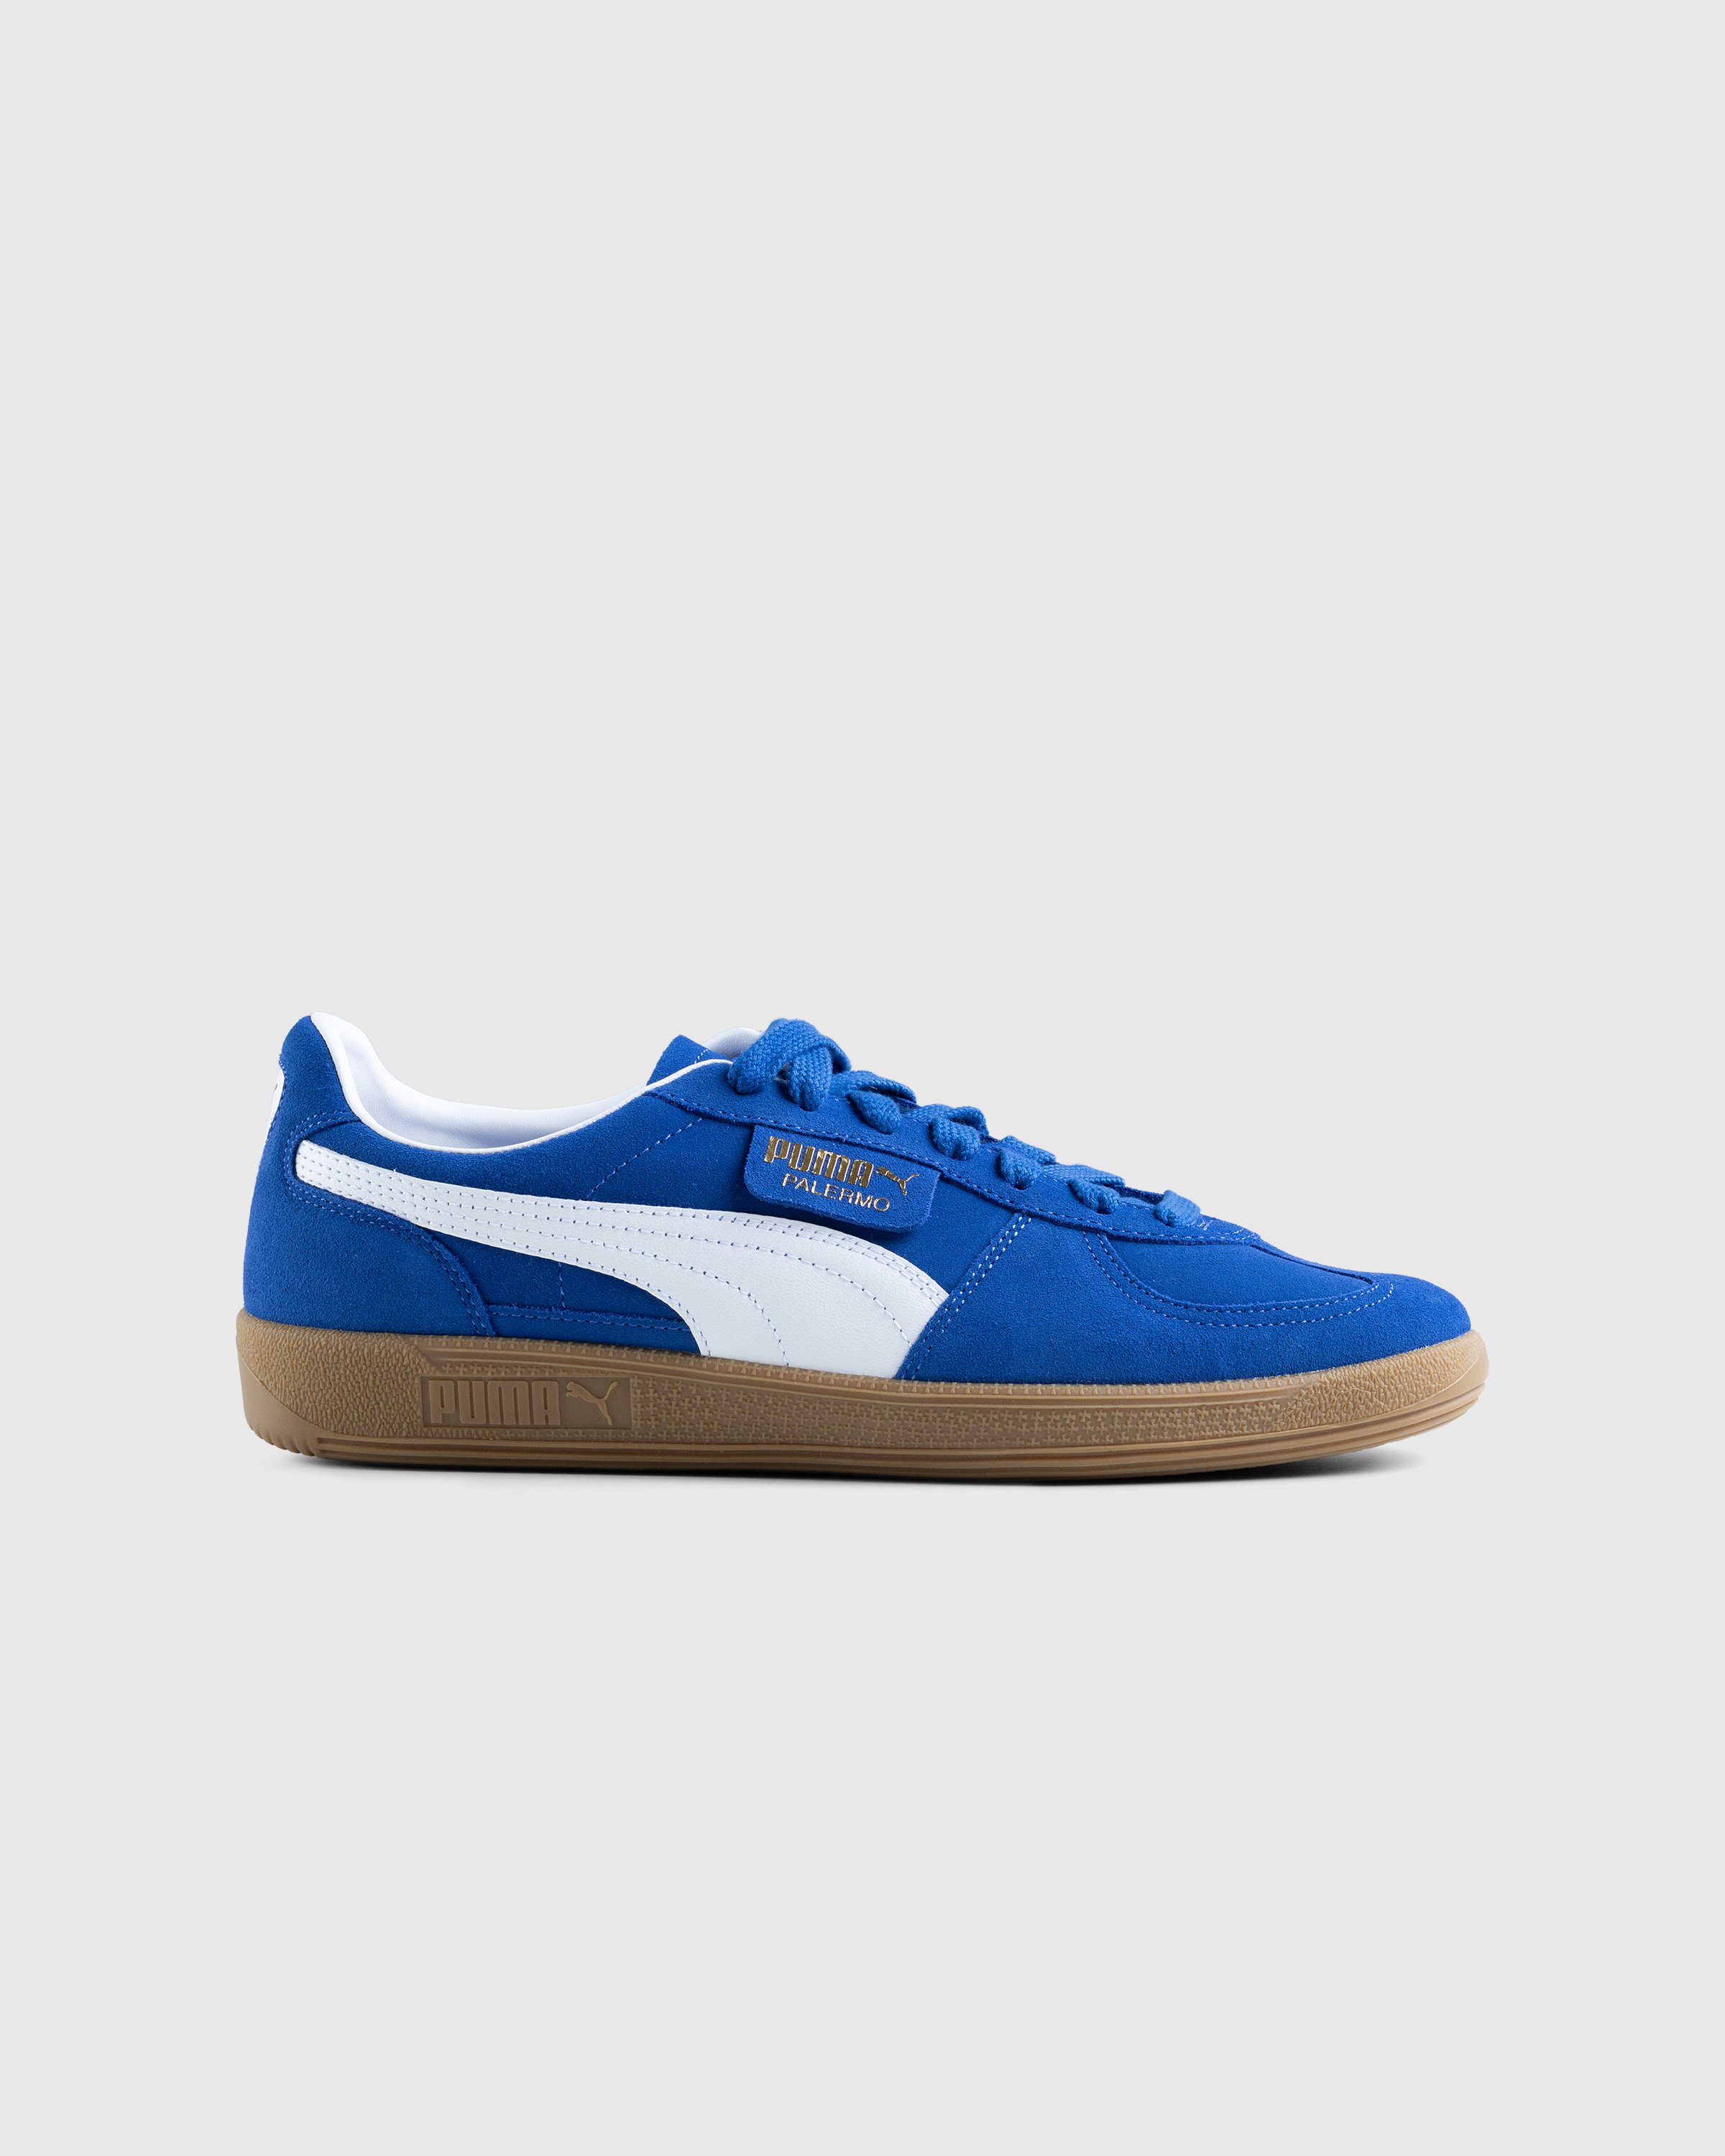 Puma - Palermo Cobalt Glaze/White - Footwear - Blue - Image 1